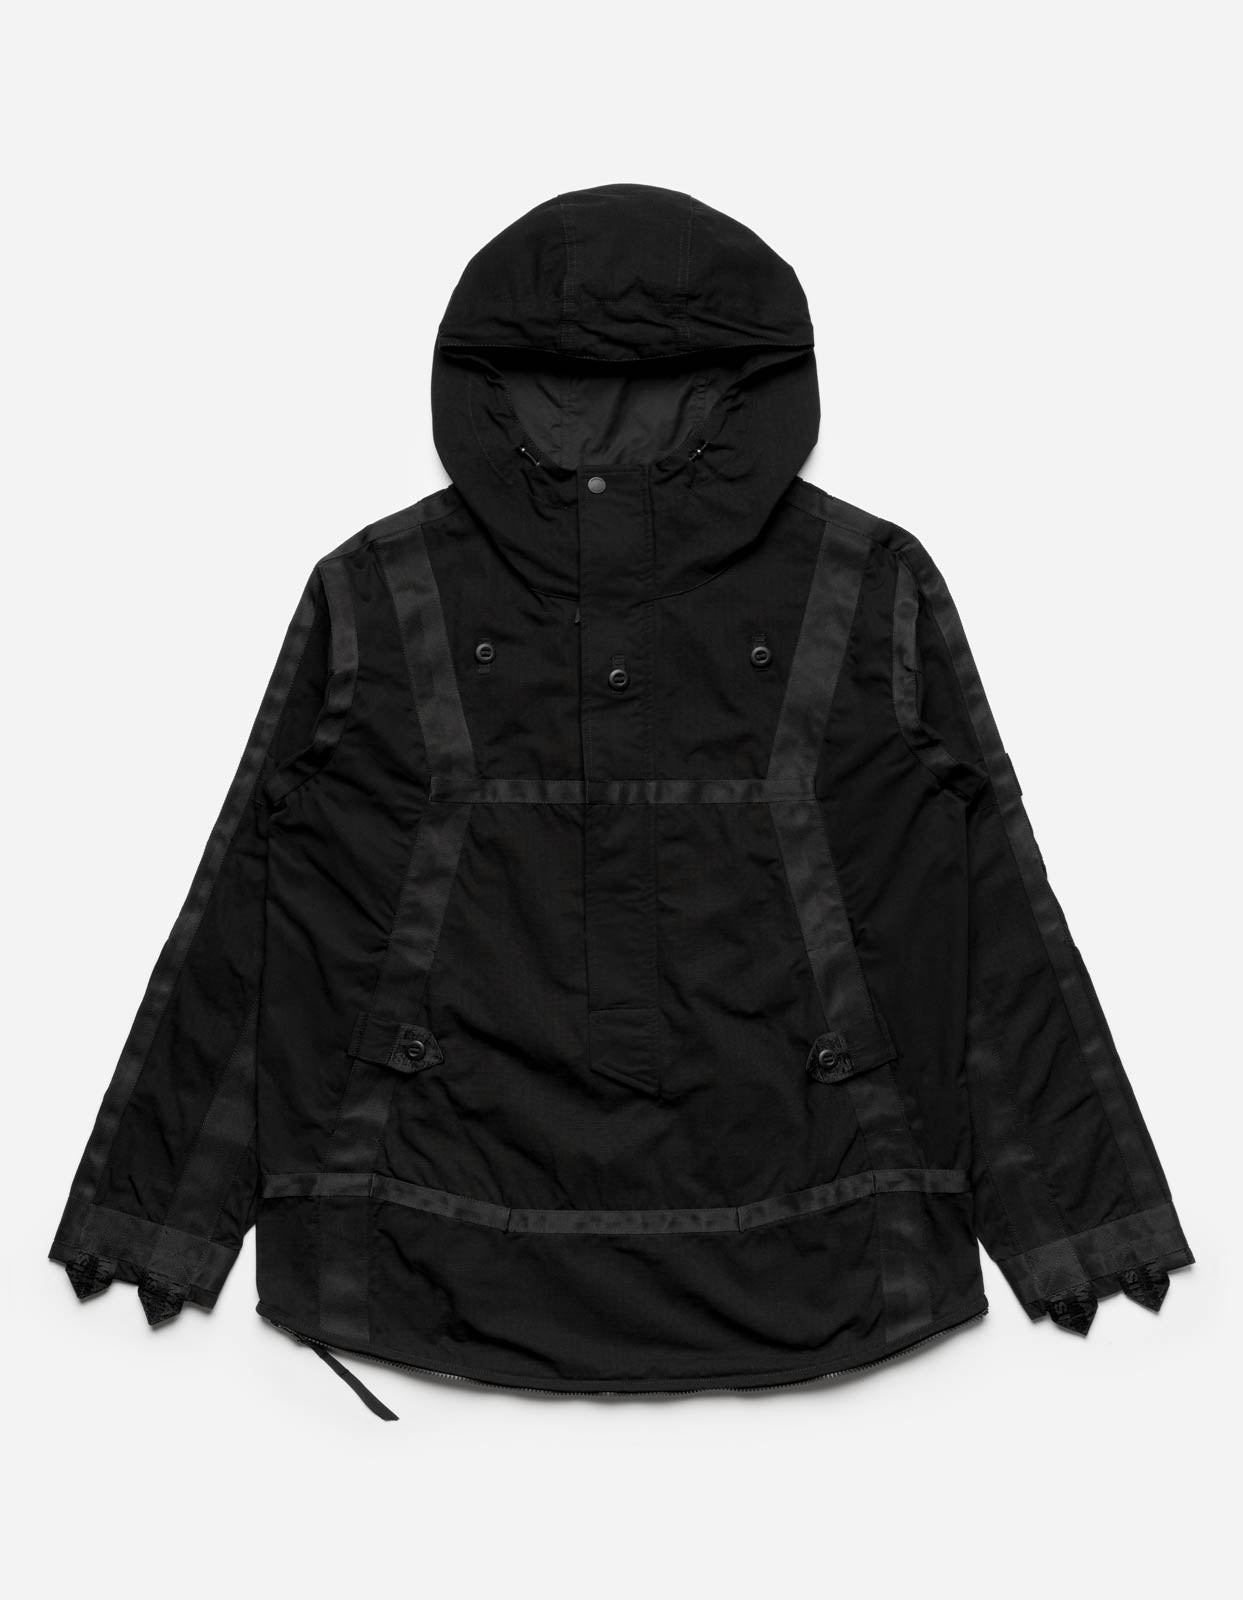 Cordura NYCO® Backpack Jacket in Black